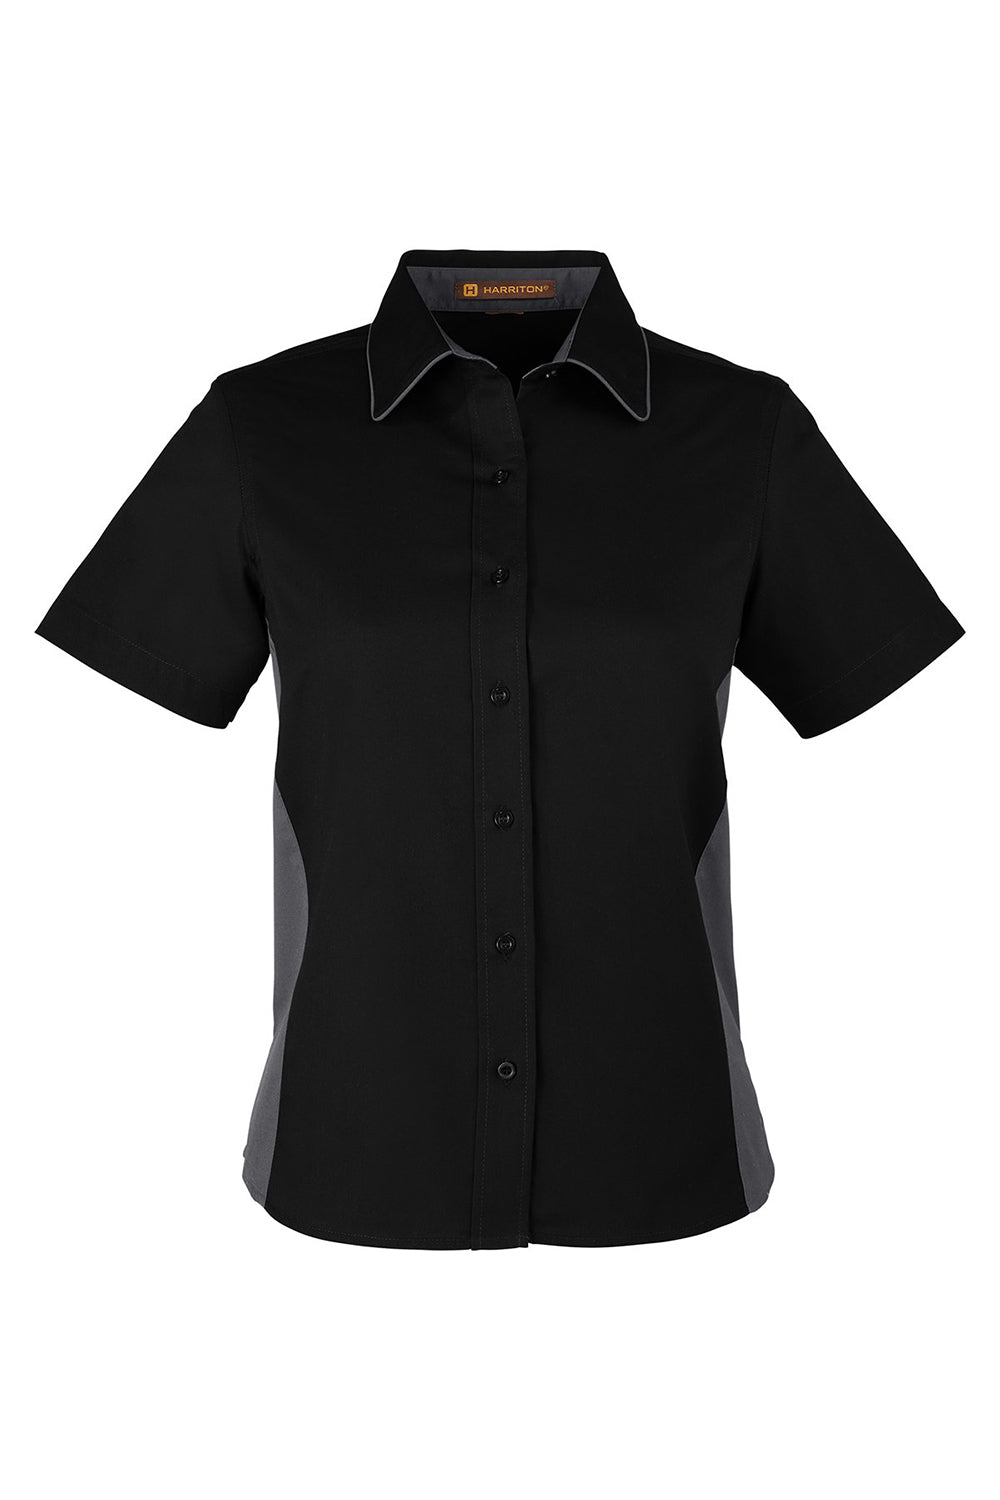 Harriton M586W Womens Flash Colorblock Short Sleeve Button Down Shirt Black/Dark Charcoal Grey Flat Front